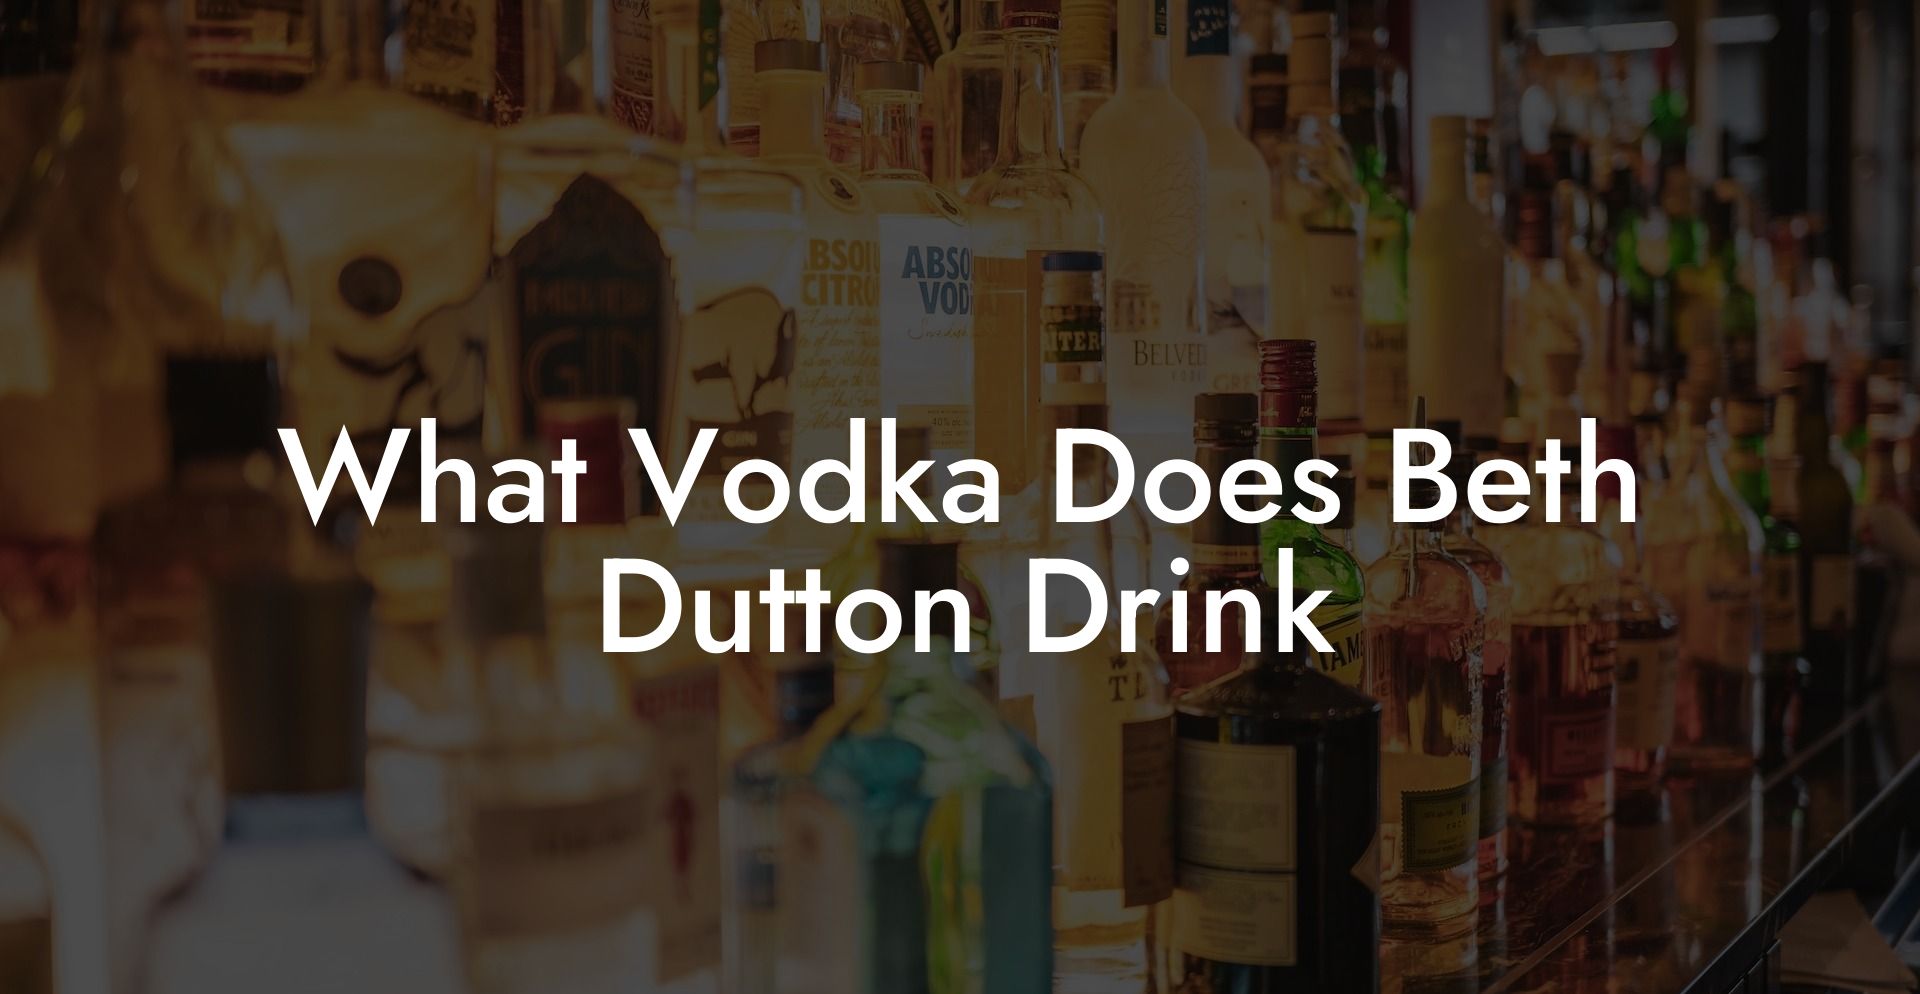 What Vodka Does Beth Dutton Drink